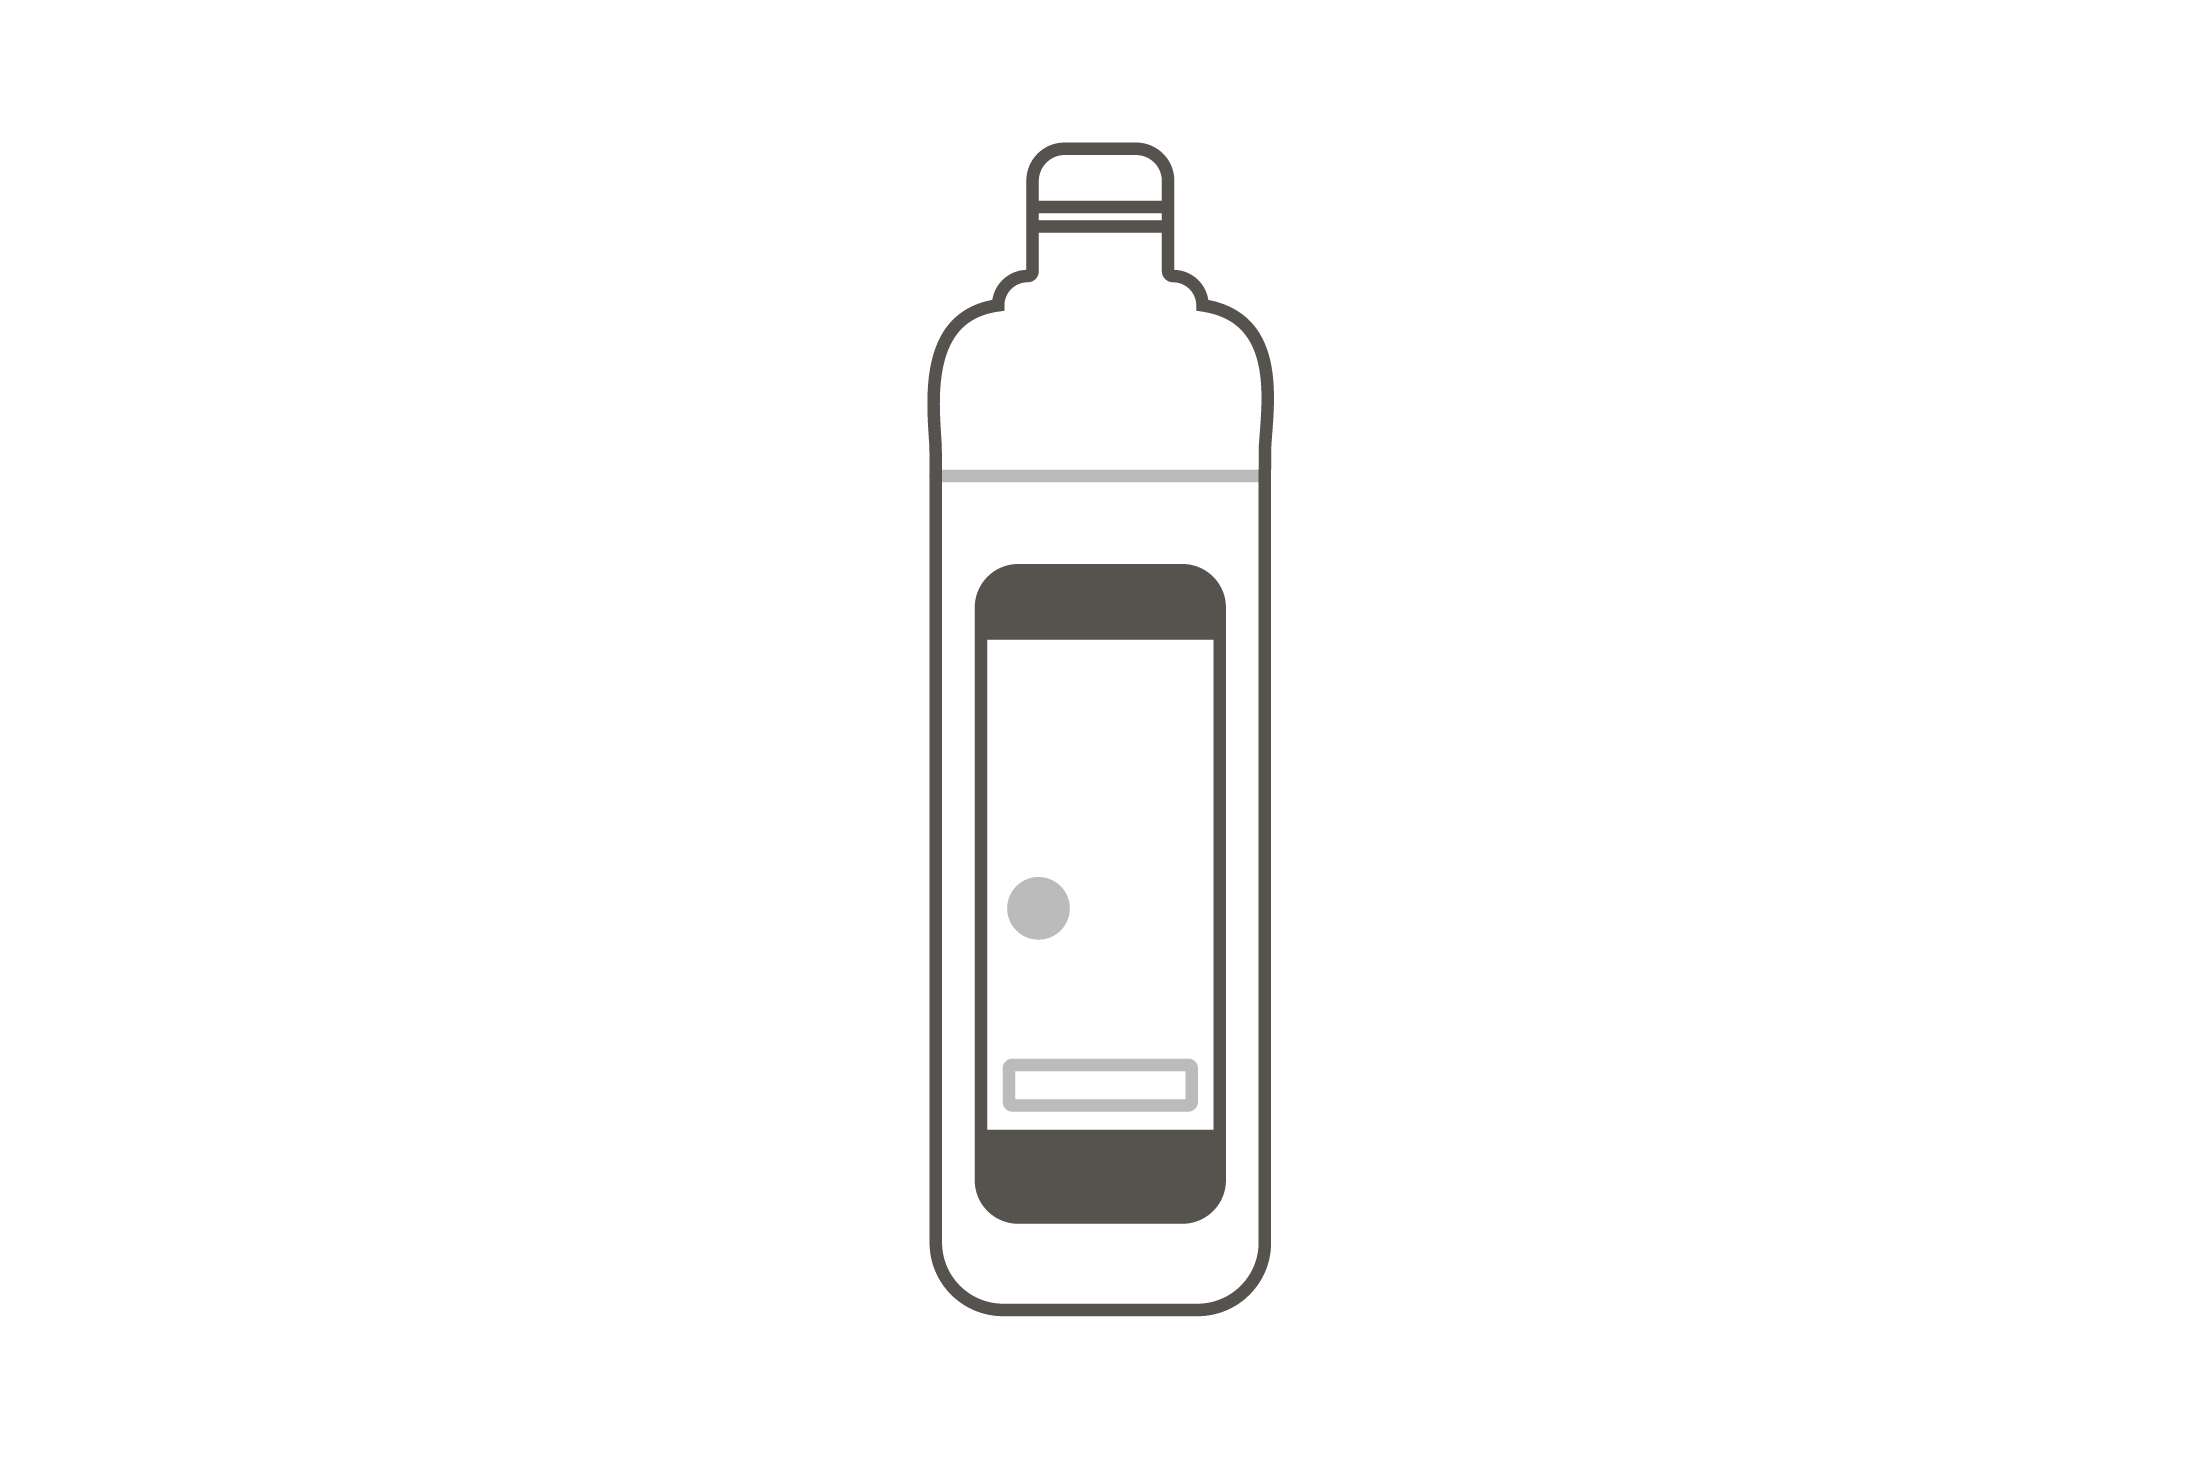 image of a filter bottle